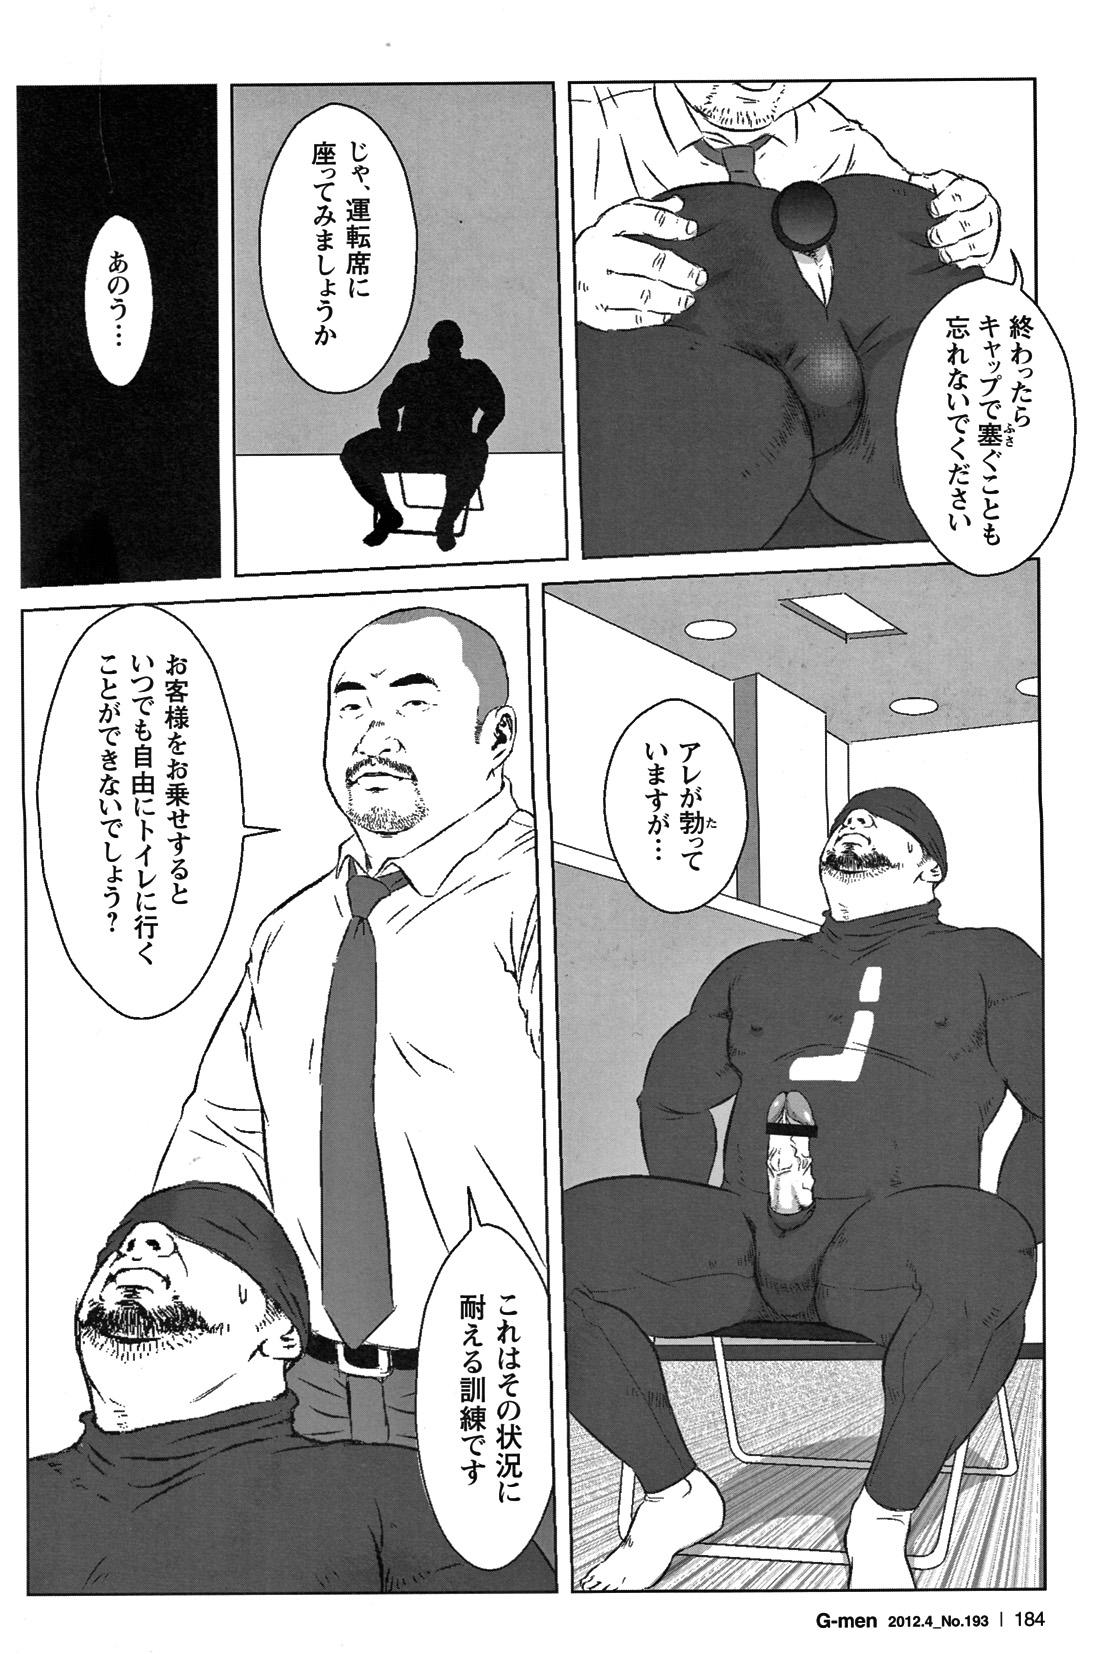 Comic G-men Gaho No.05 169